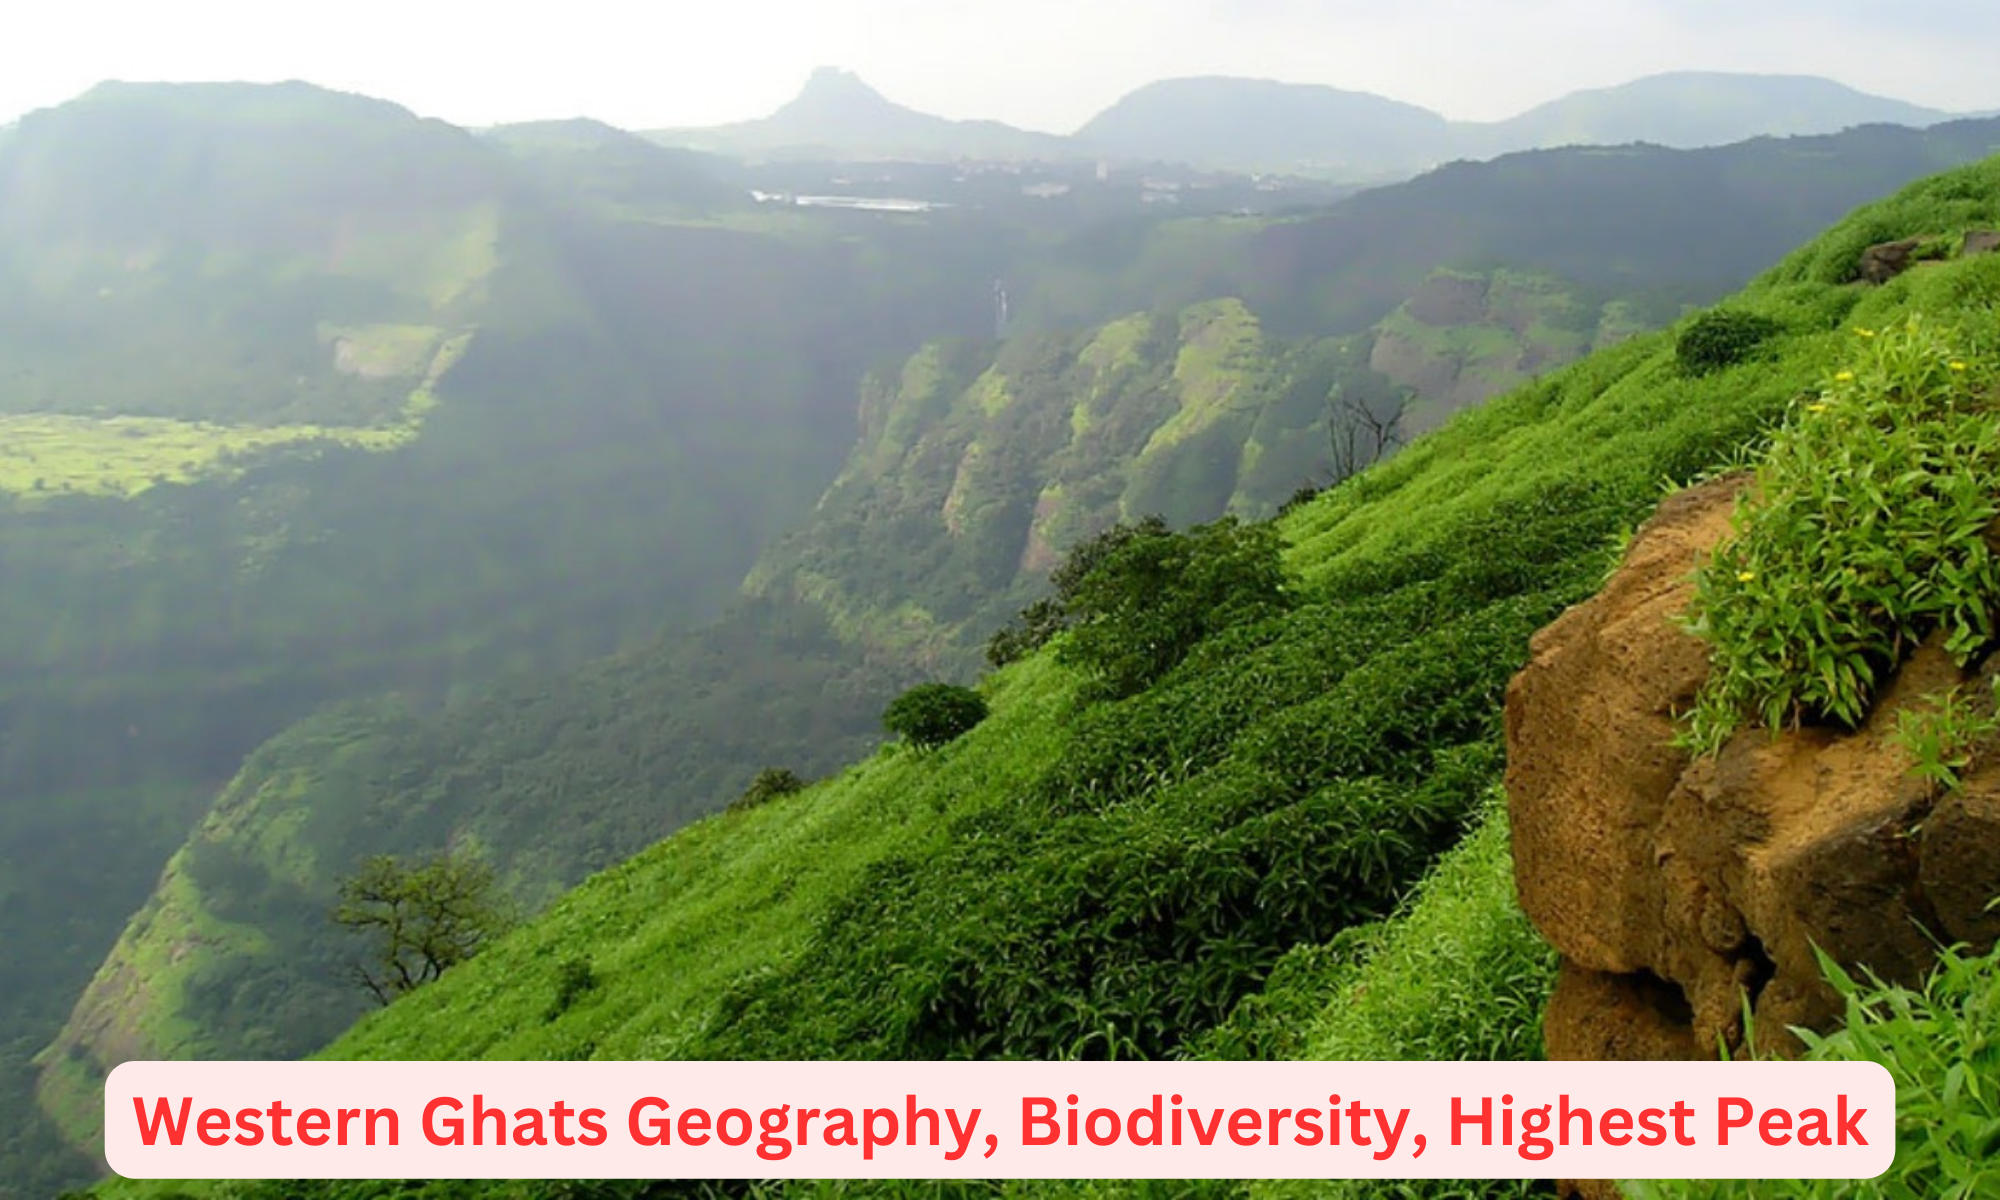 Western Ghats Geography, Biodiversity, Highest Peak